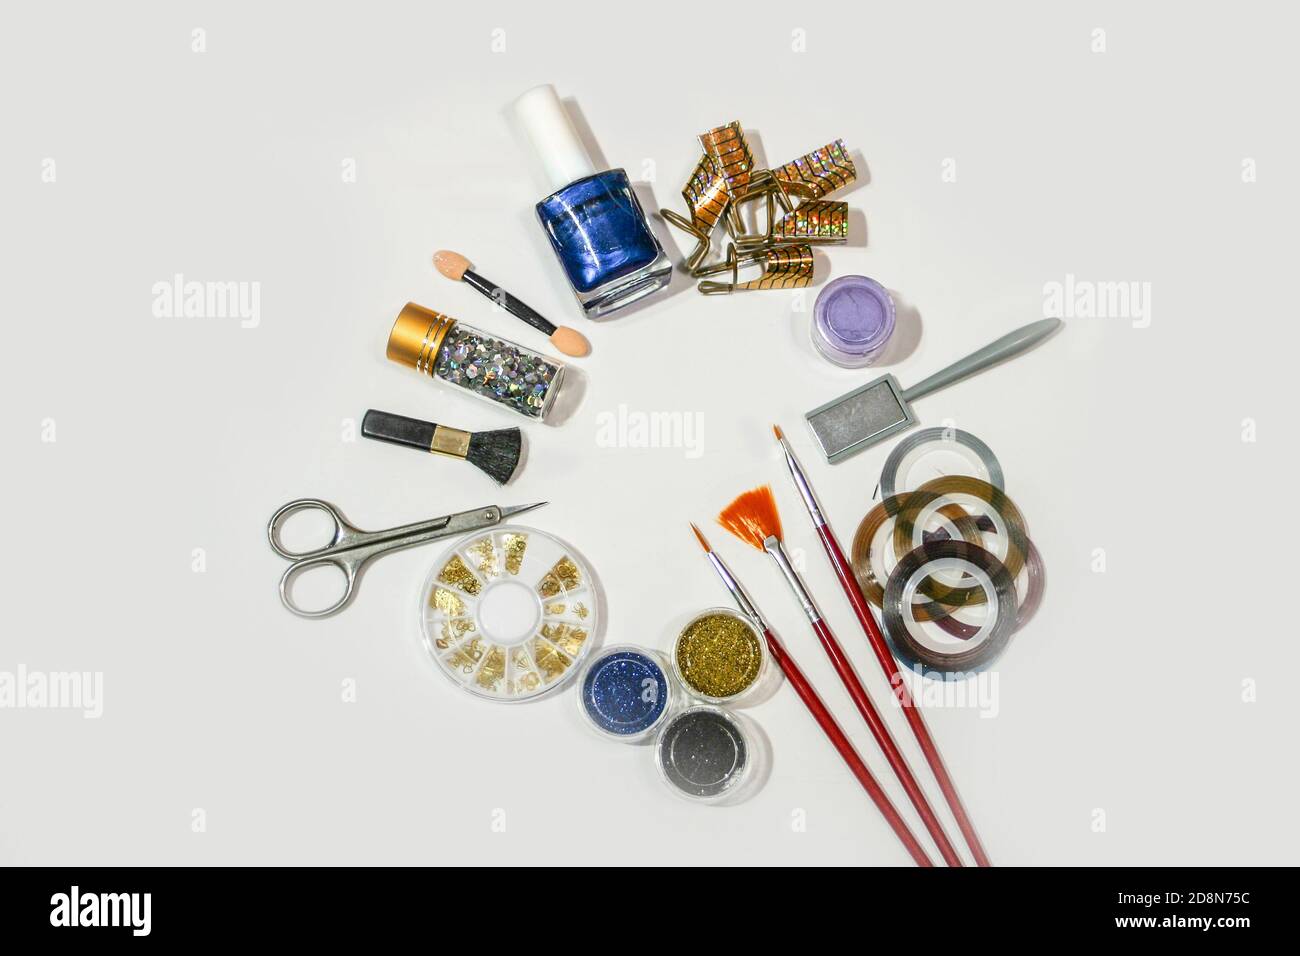 Nails design tools Stock Photo